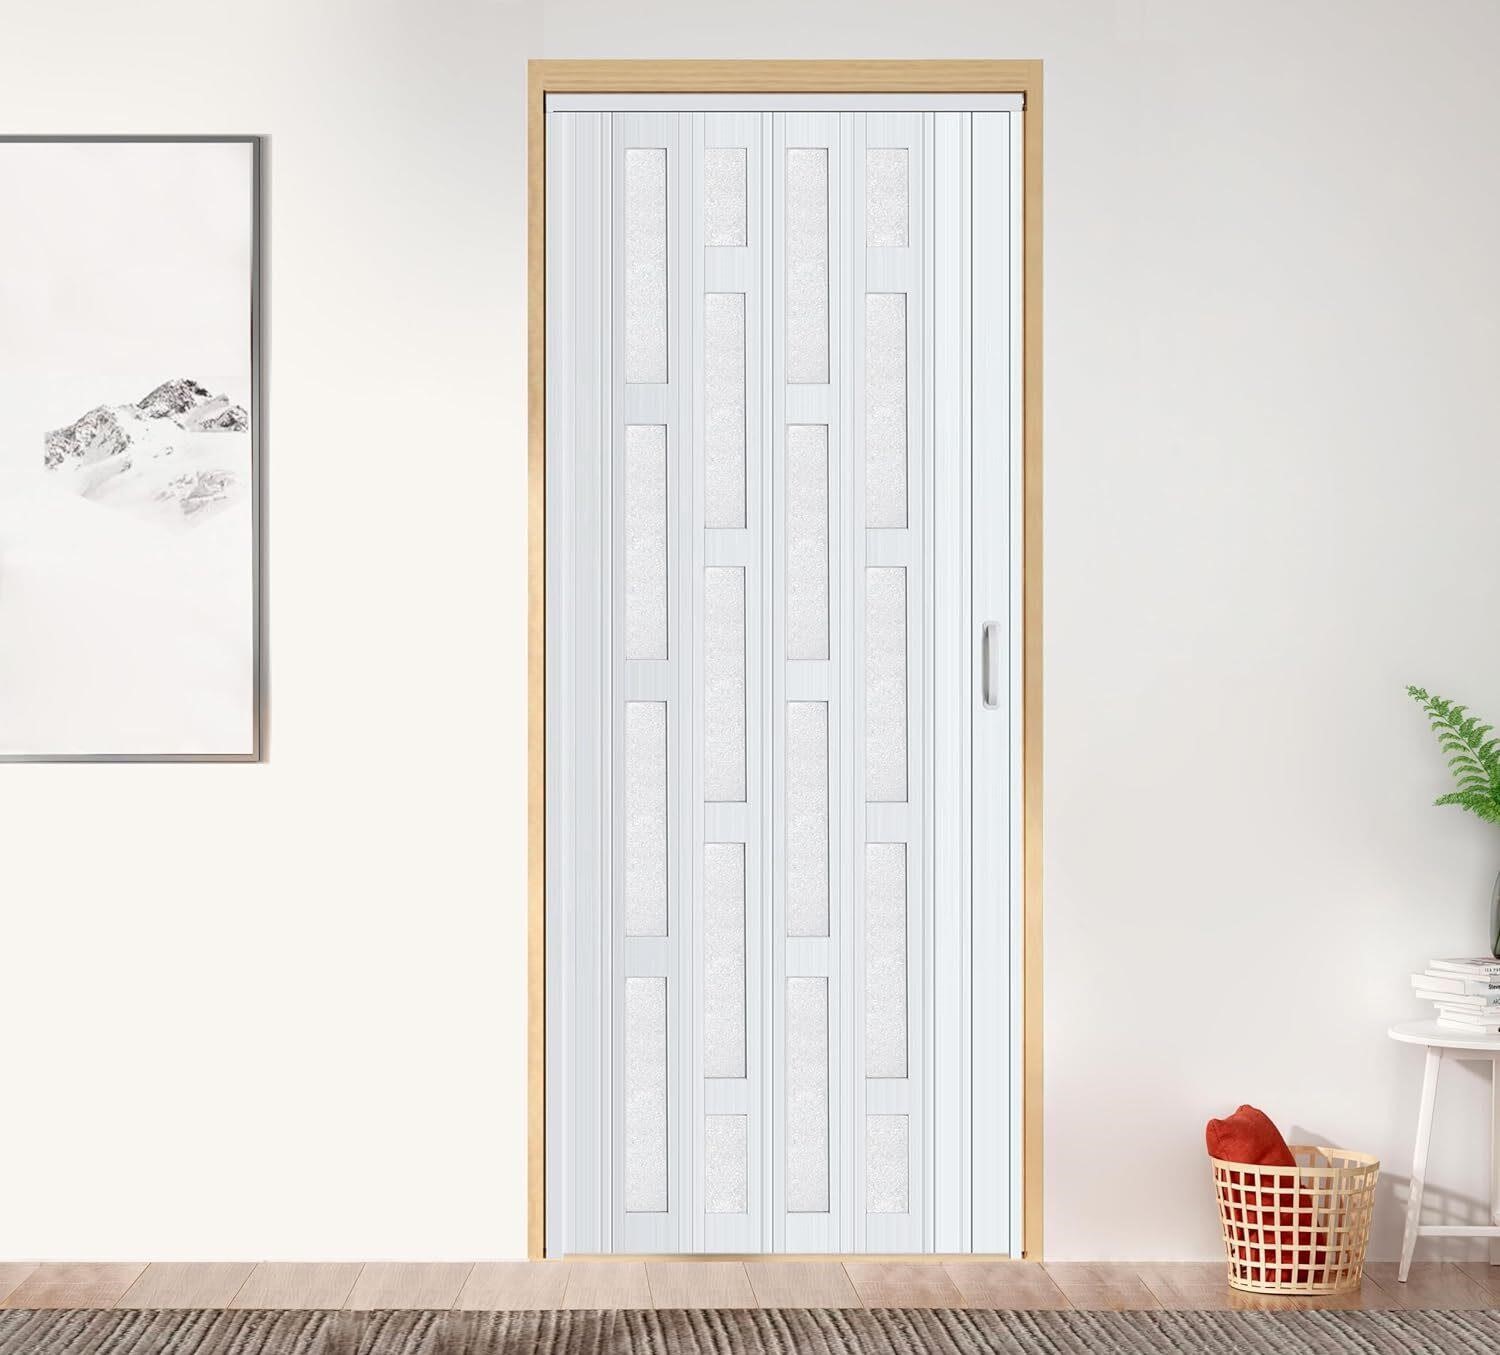 DIYHD 36X80in White PVC Folding Accordion Door